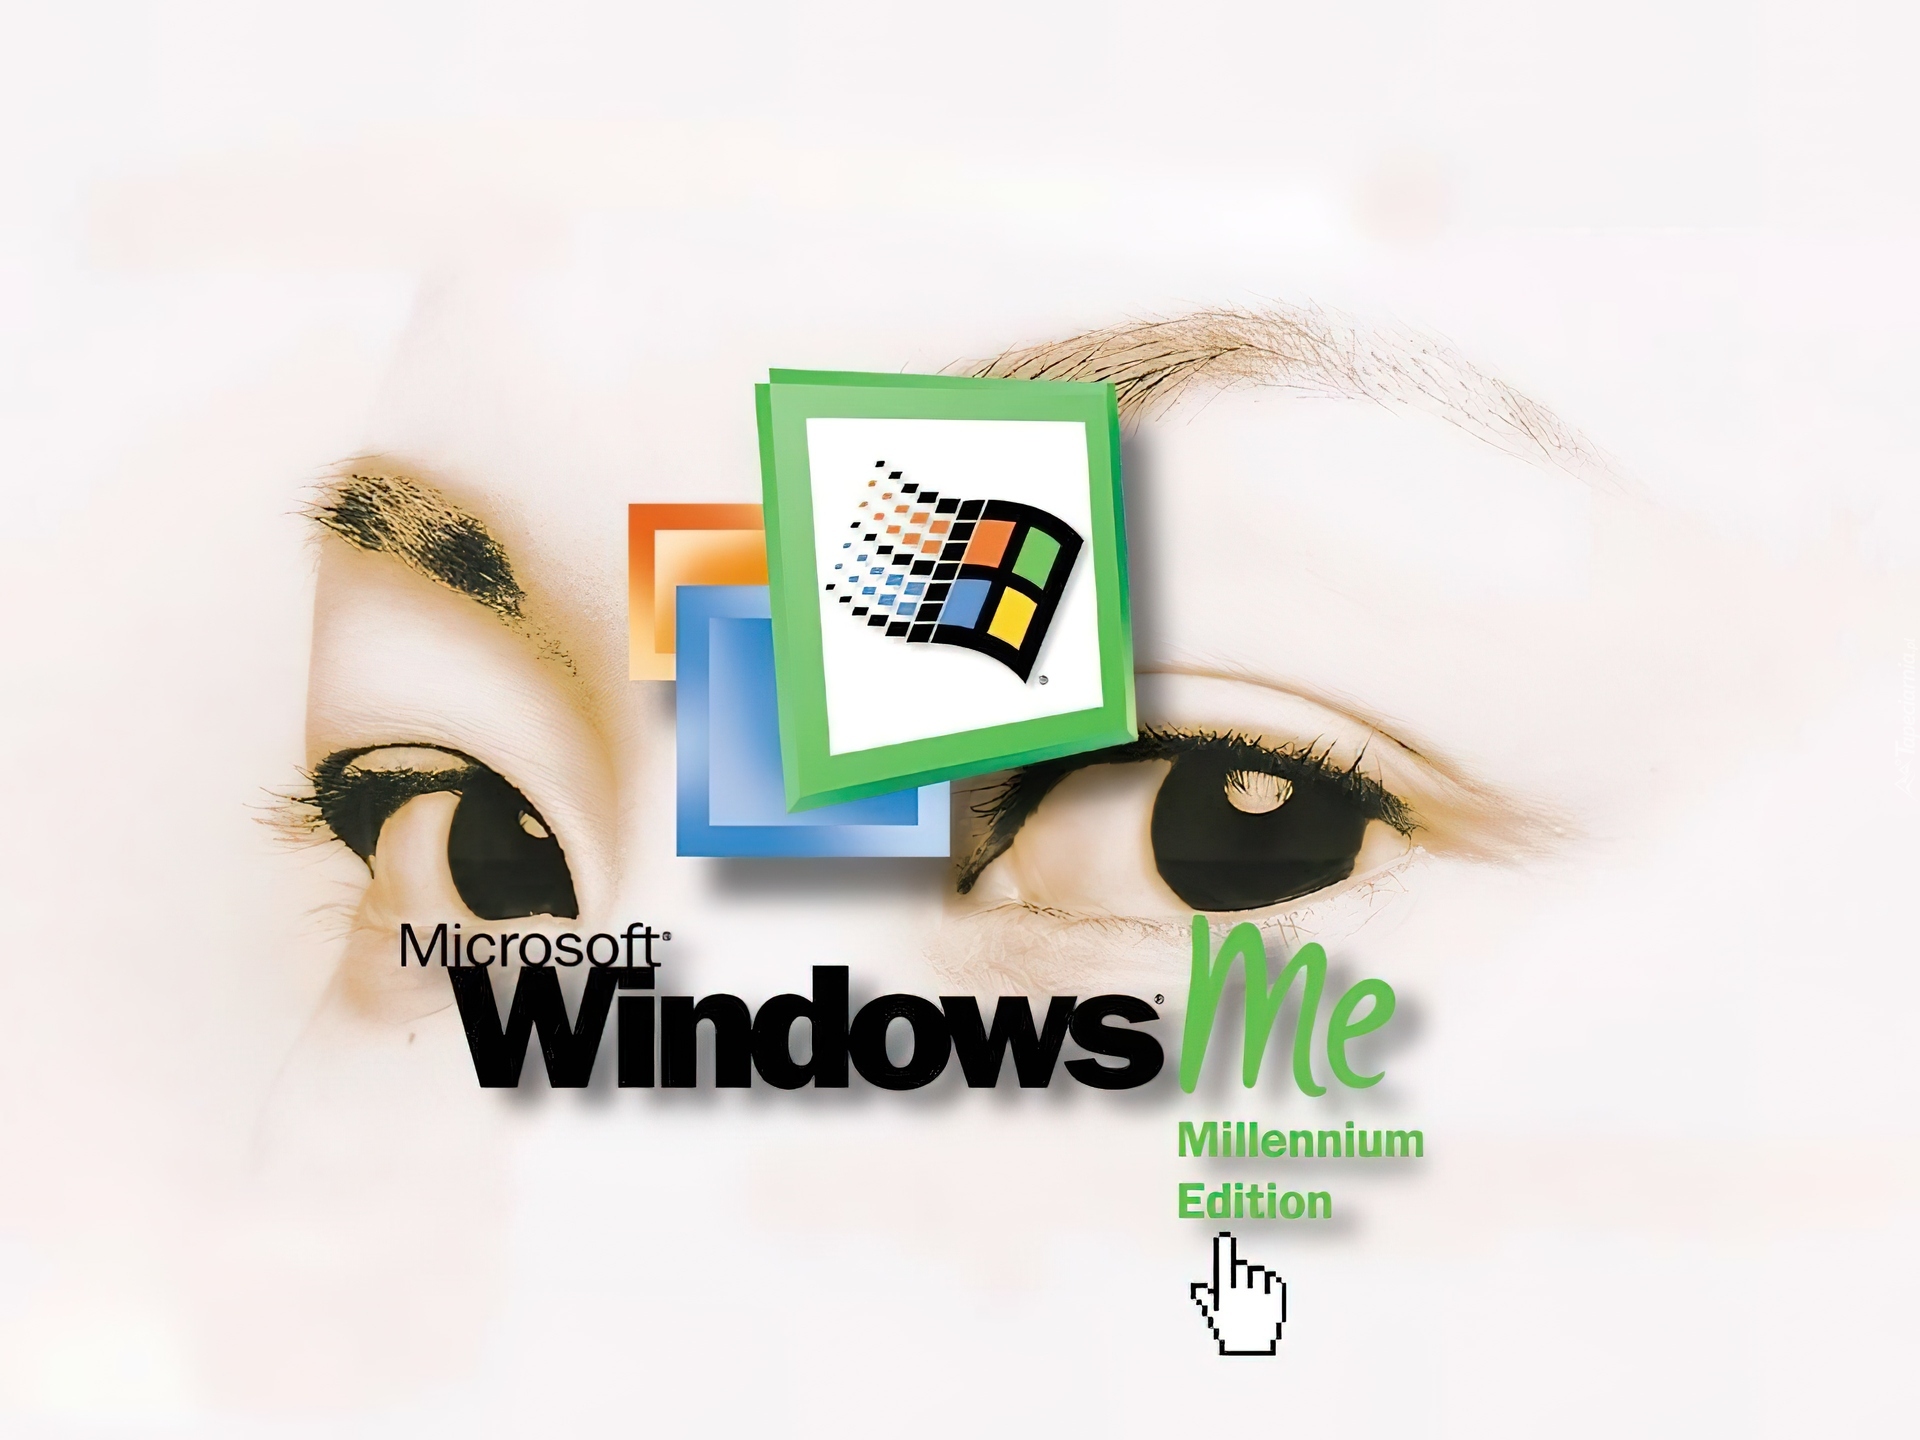 Windows Milenium, Oczy